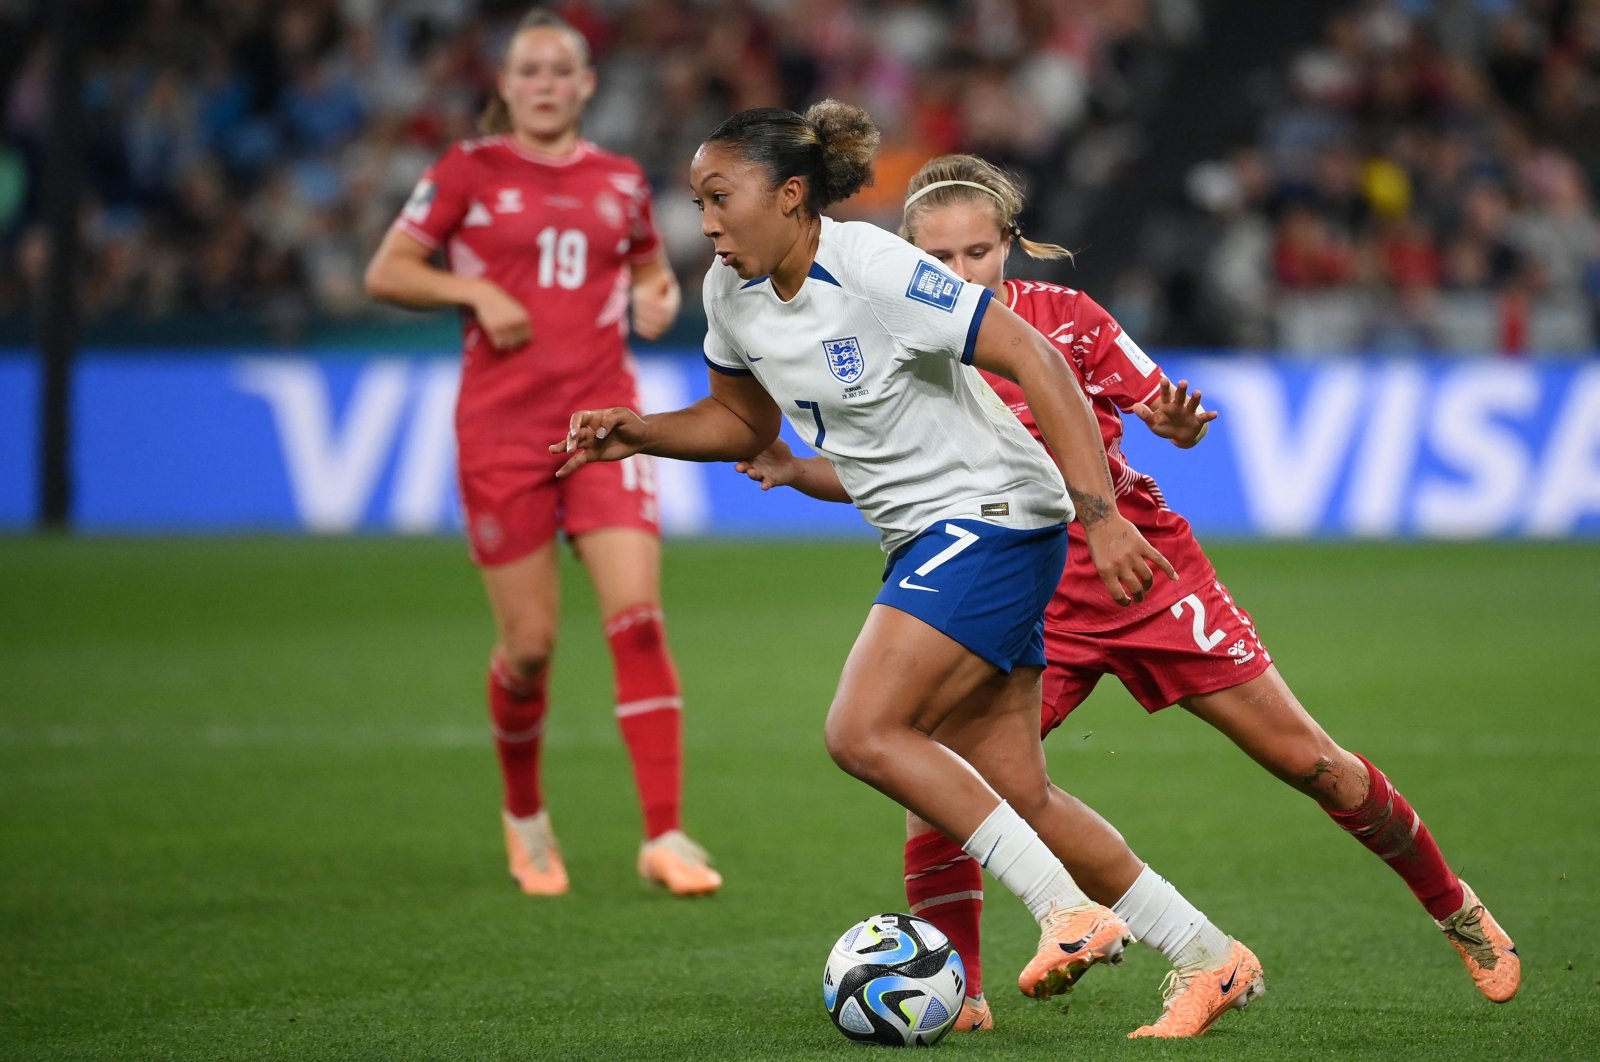 England's Lauren James (C) runs with the ball next to Denmark's Josefine Hasbo (R) during the Women's World Cup match at Sydney Football Stadium, Sydney, Australia, July 28, 2023. (AFP Photo)